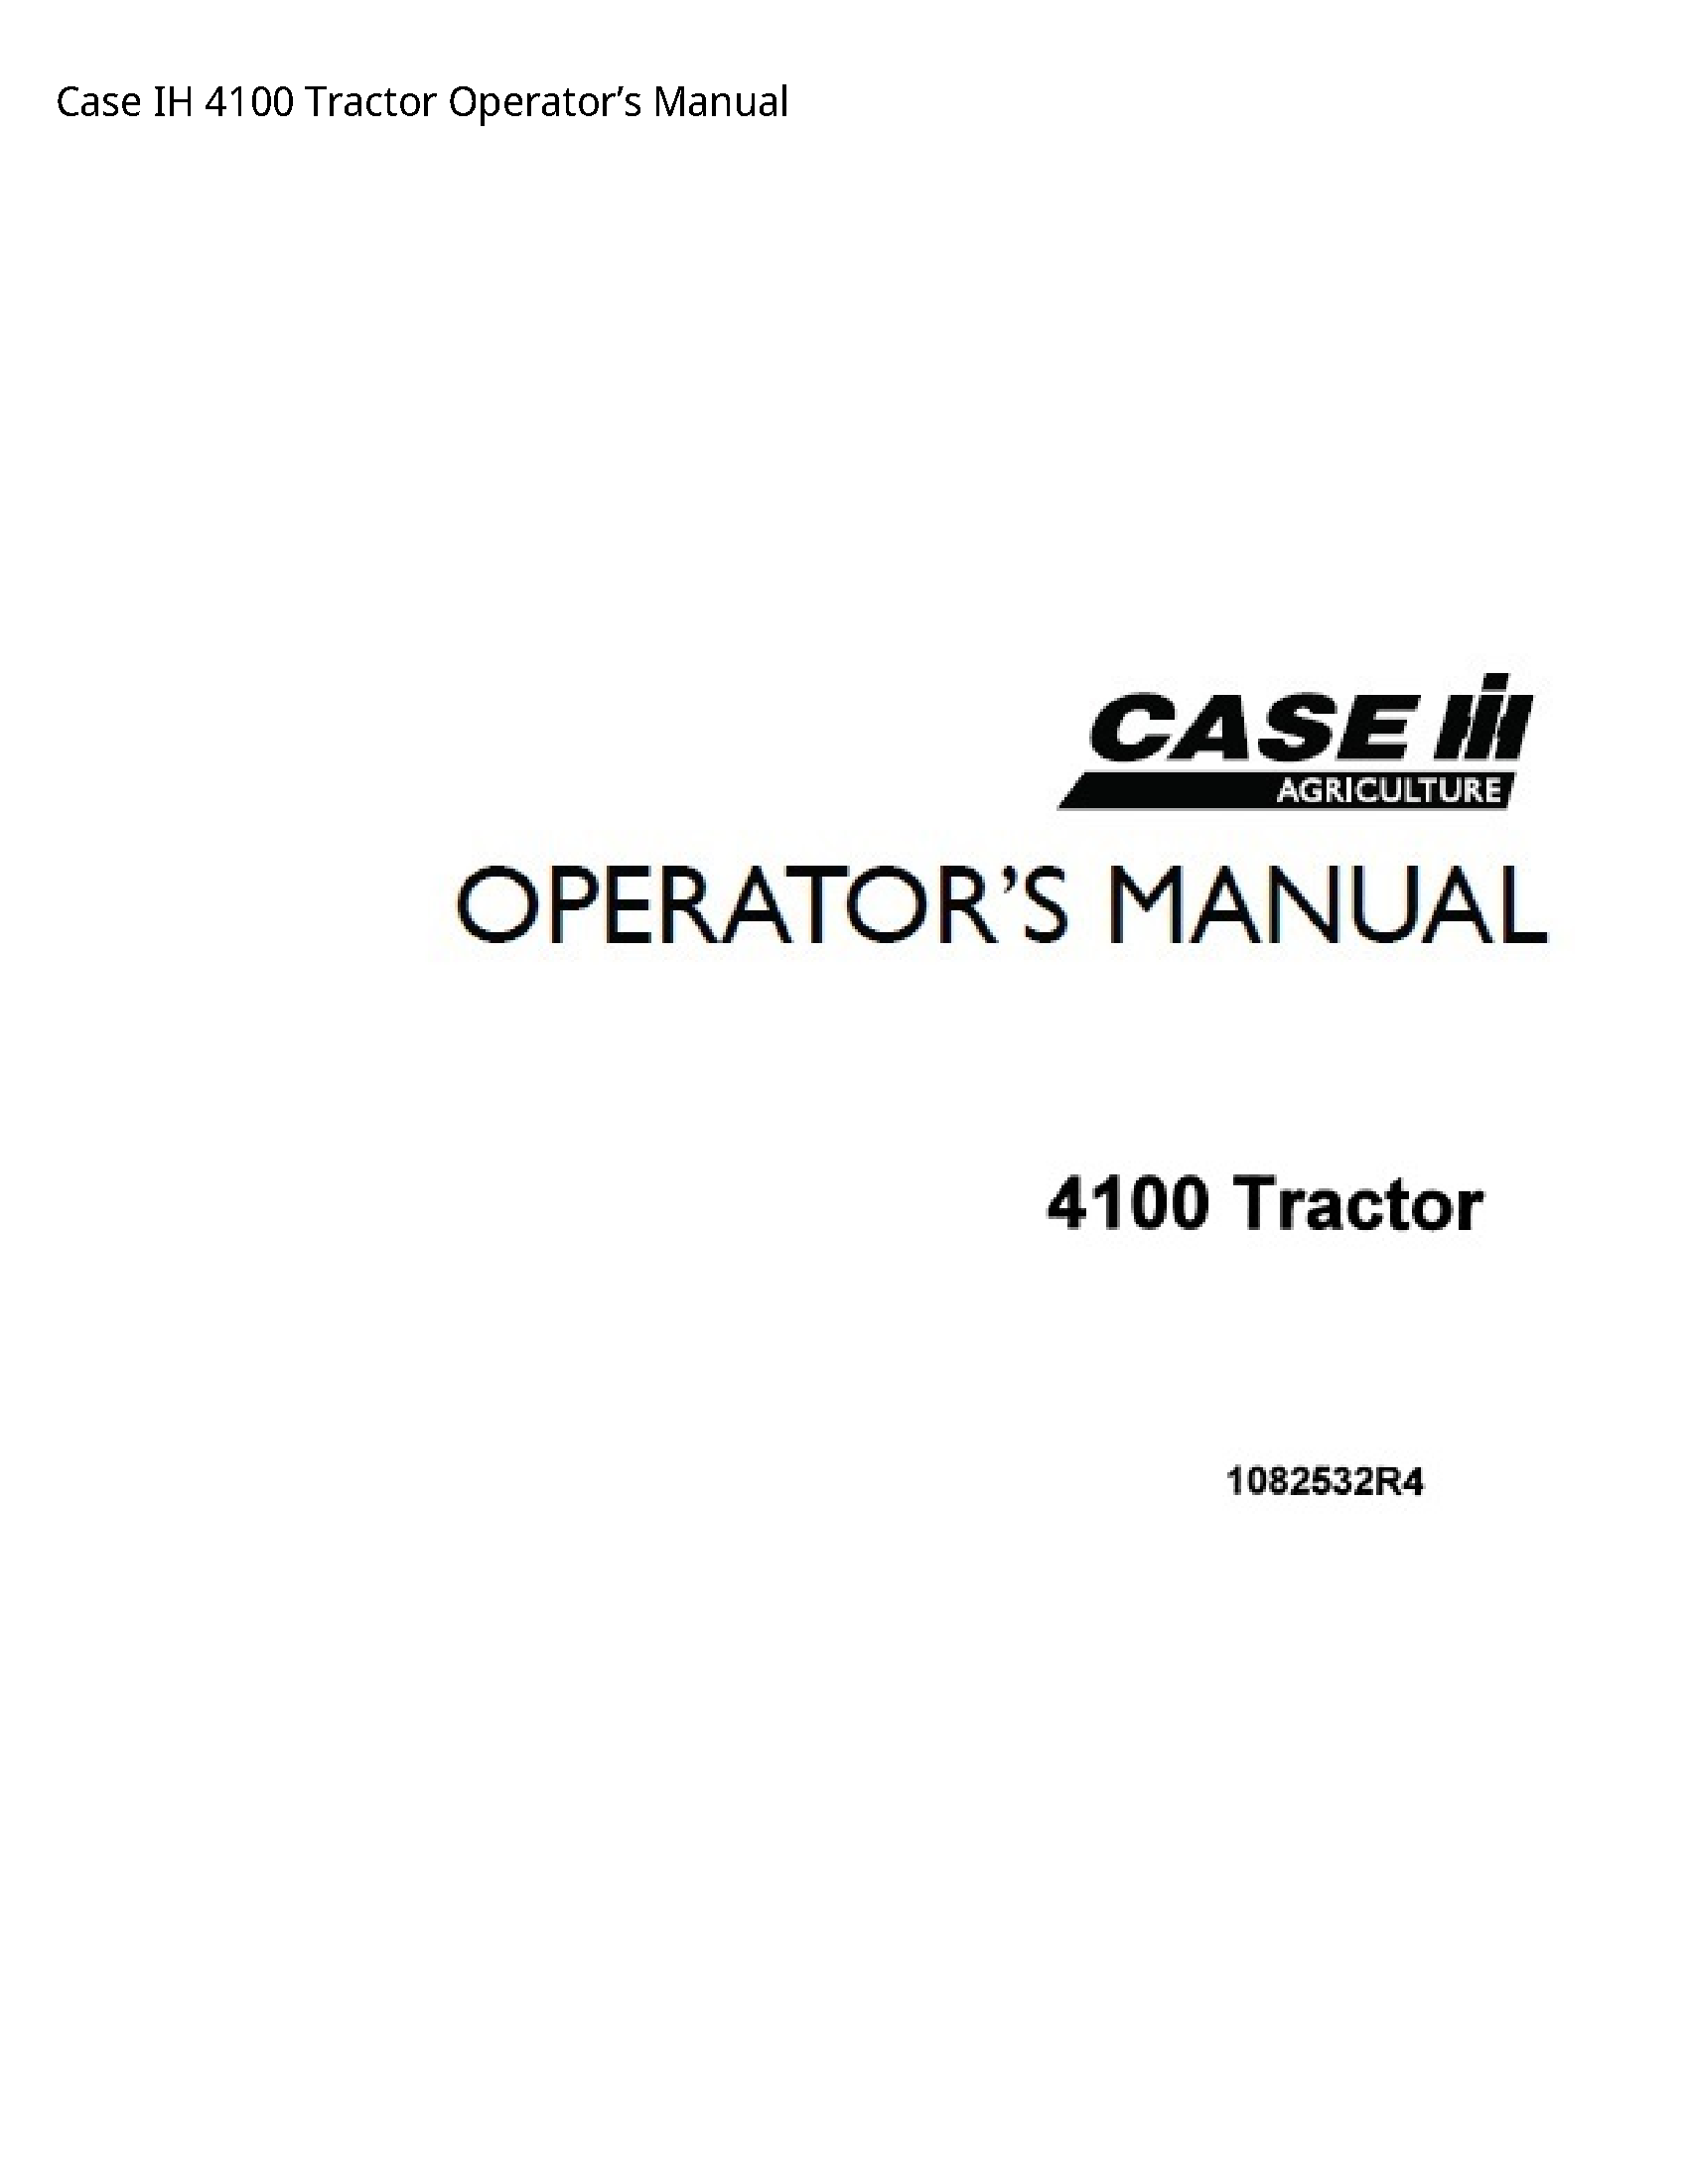 Case/Case IH 4100 IH Tractor Operator’s manual